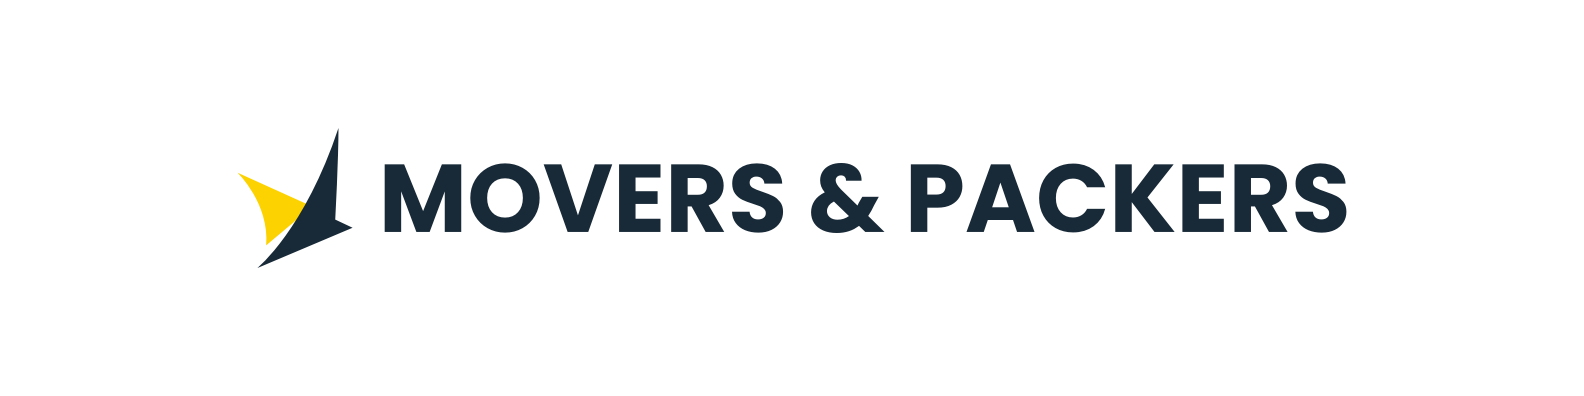 MOVERS PACKERS Logo - LinkedIn Hero Image - 1584x396